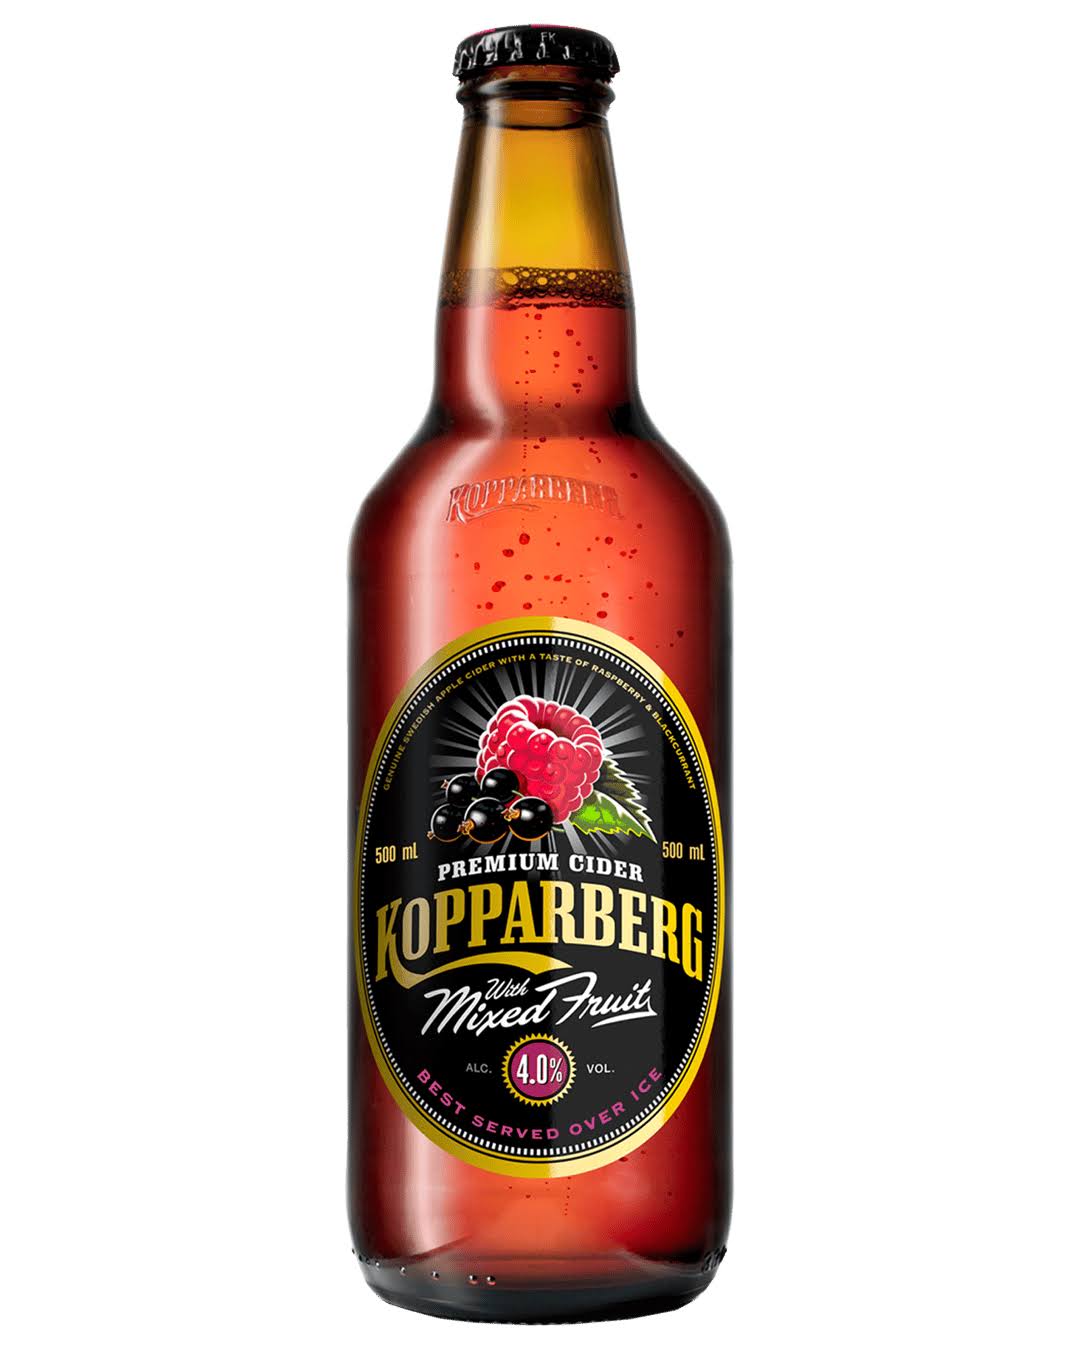 Kopparberg Premium Cider - with Mixed Fruit, 500ml